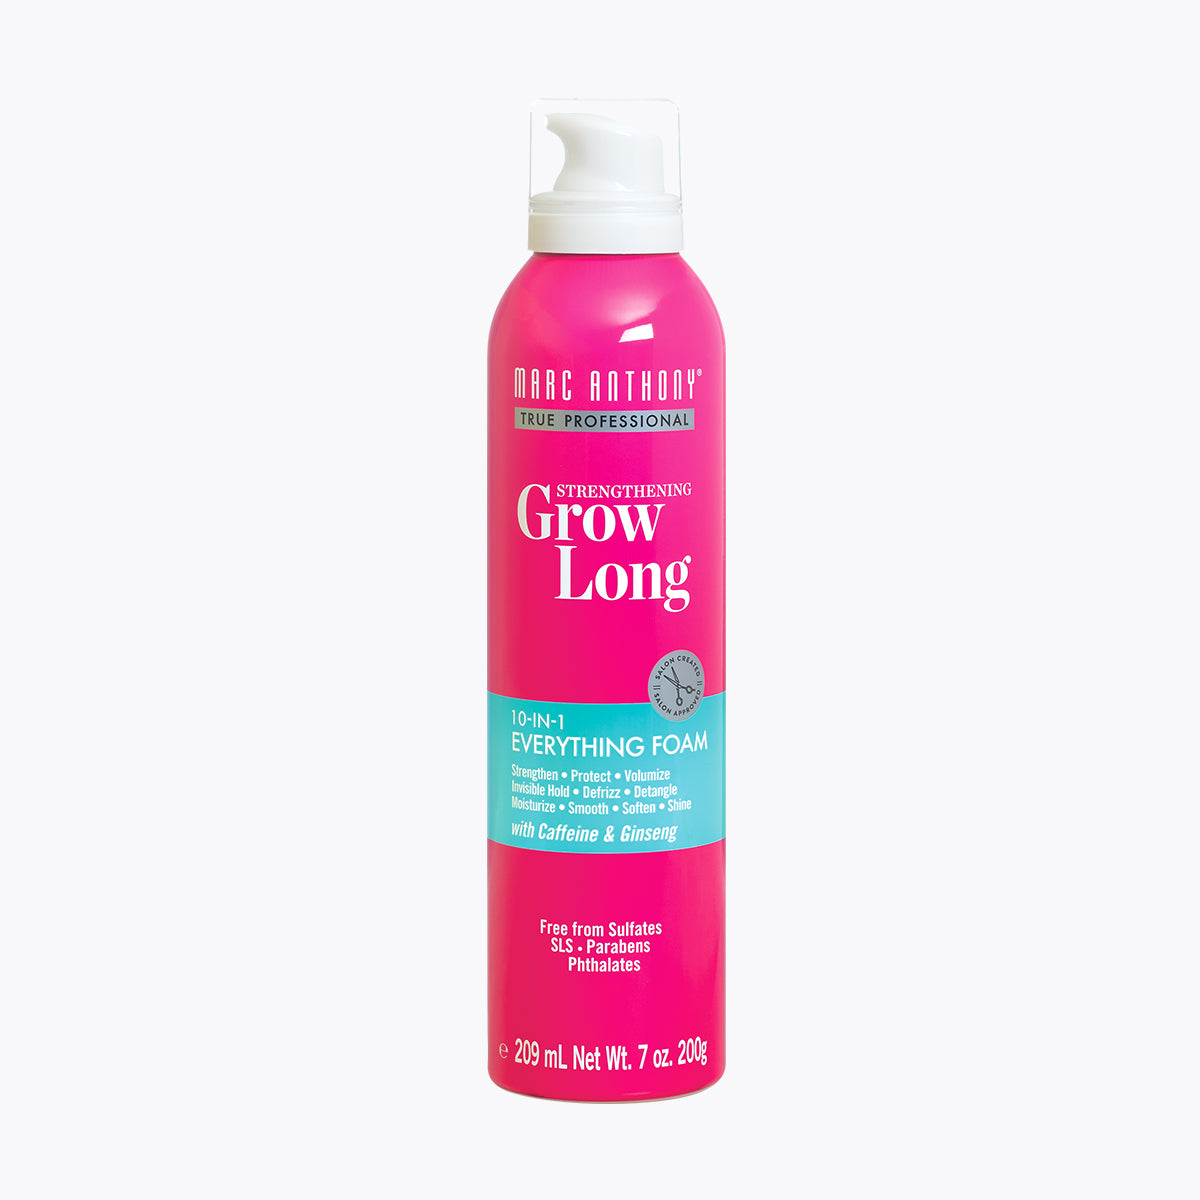 Marc Anthony True Professional Strengthening Grow Long Foaming Dry Shampoo